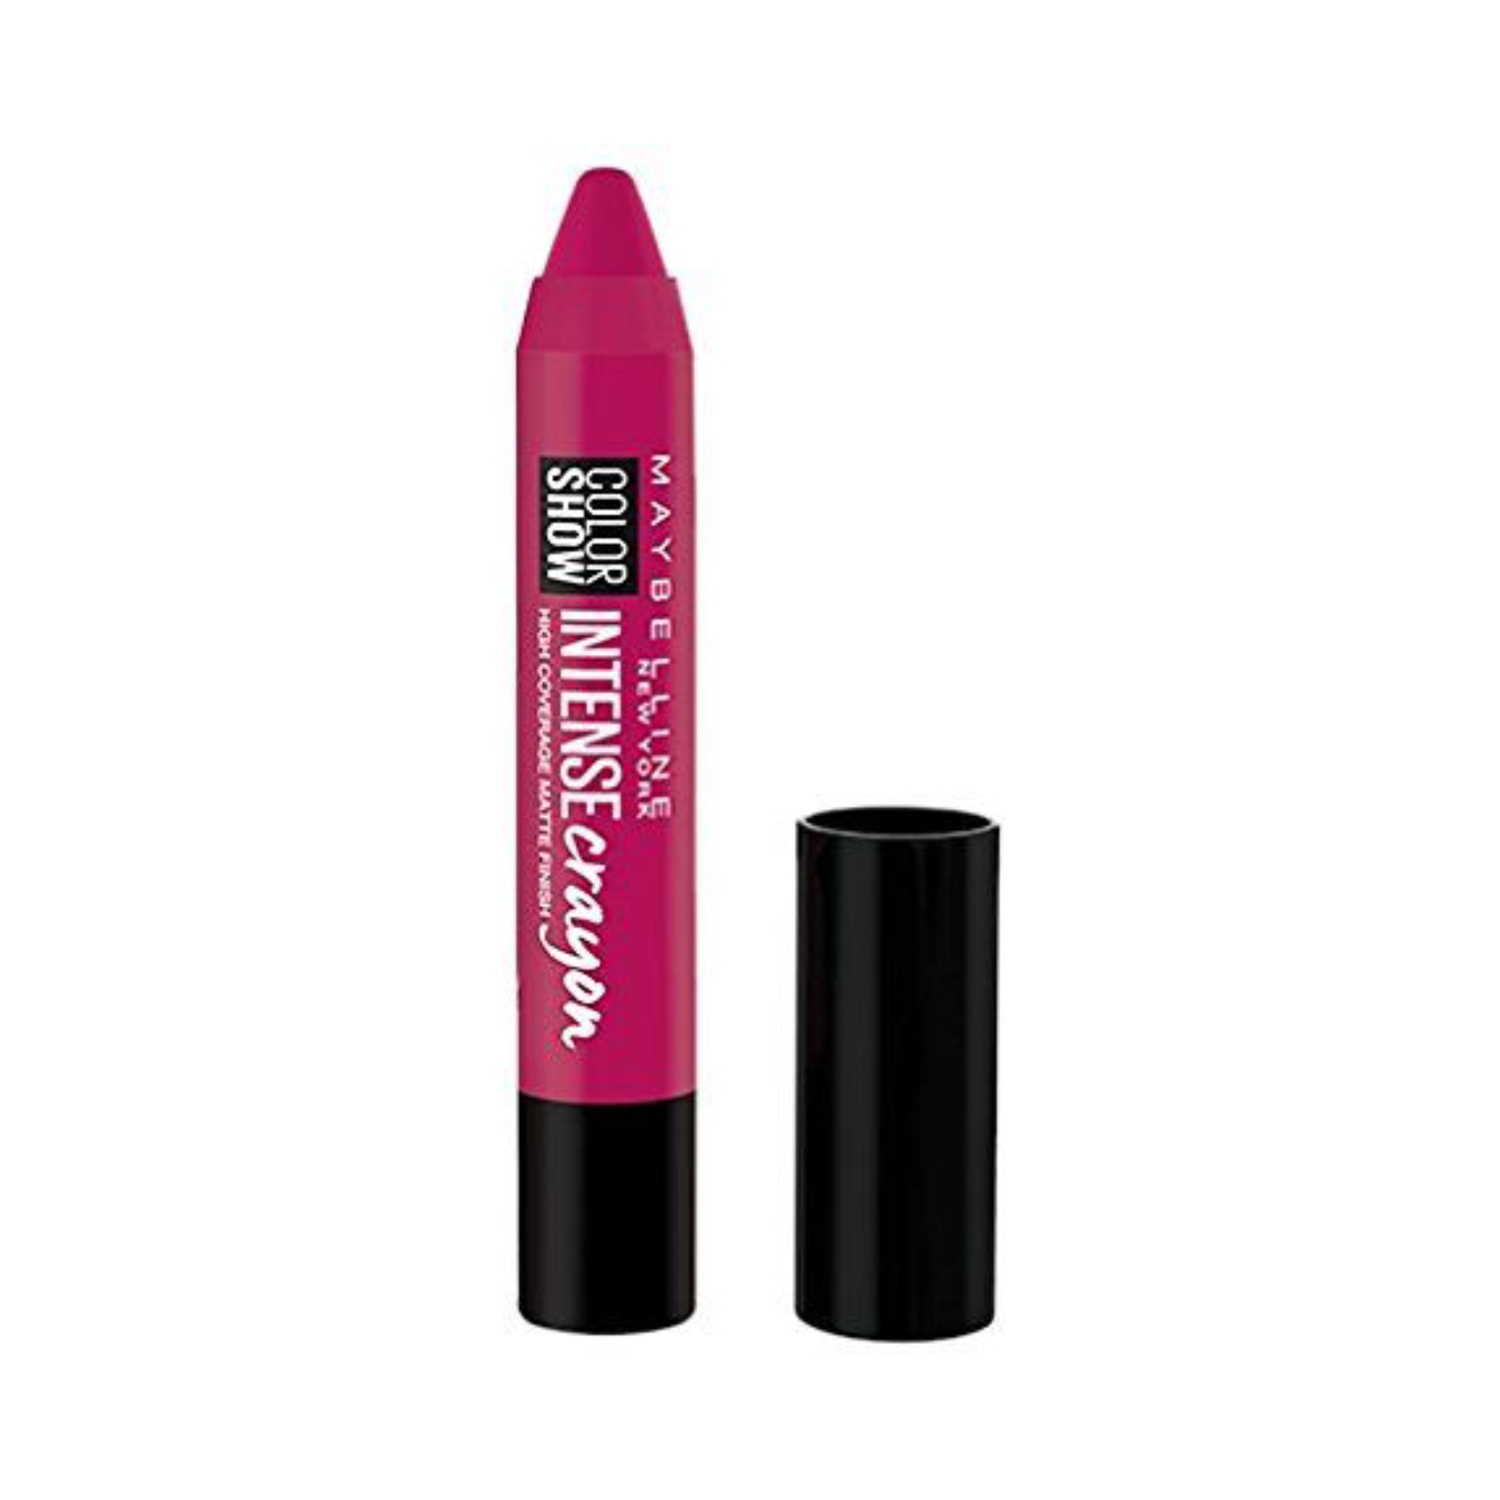 Maybelline New York | Maybelline New York Color Show Intense Lip Crayon SPF 17 - Fierce Fuchsia (3.5g)